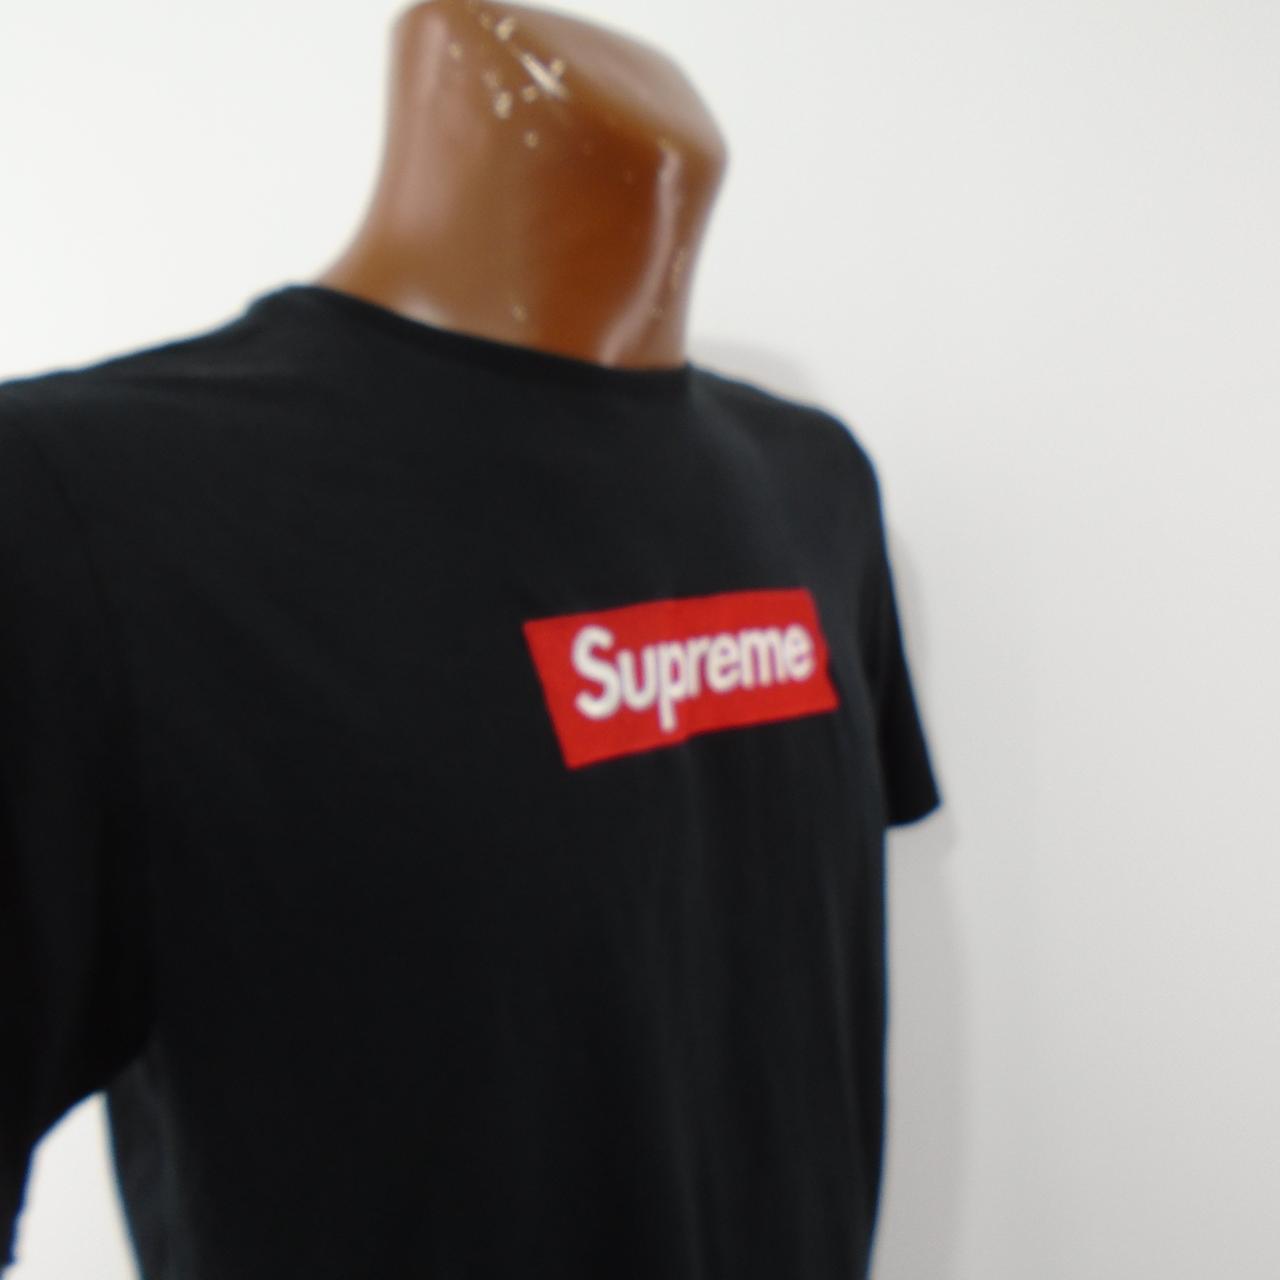 Camiseta Hombre Suprema. Negro. L. Usado. Bien